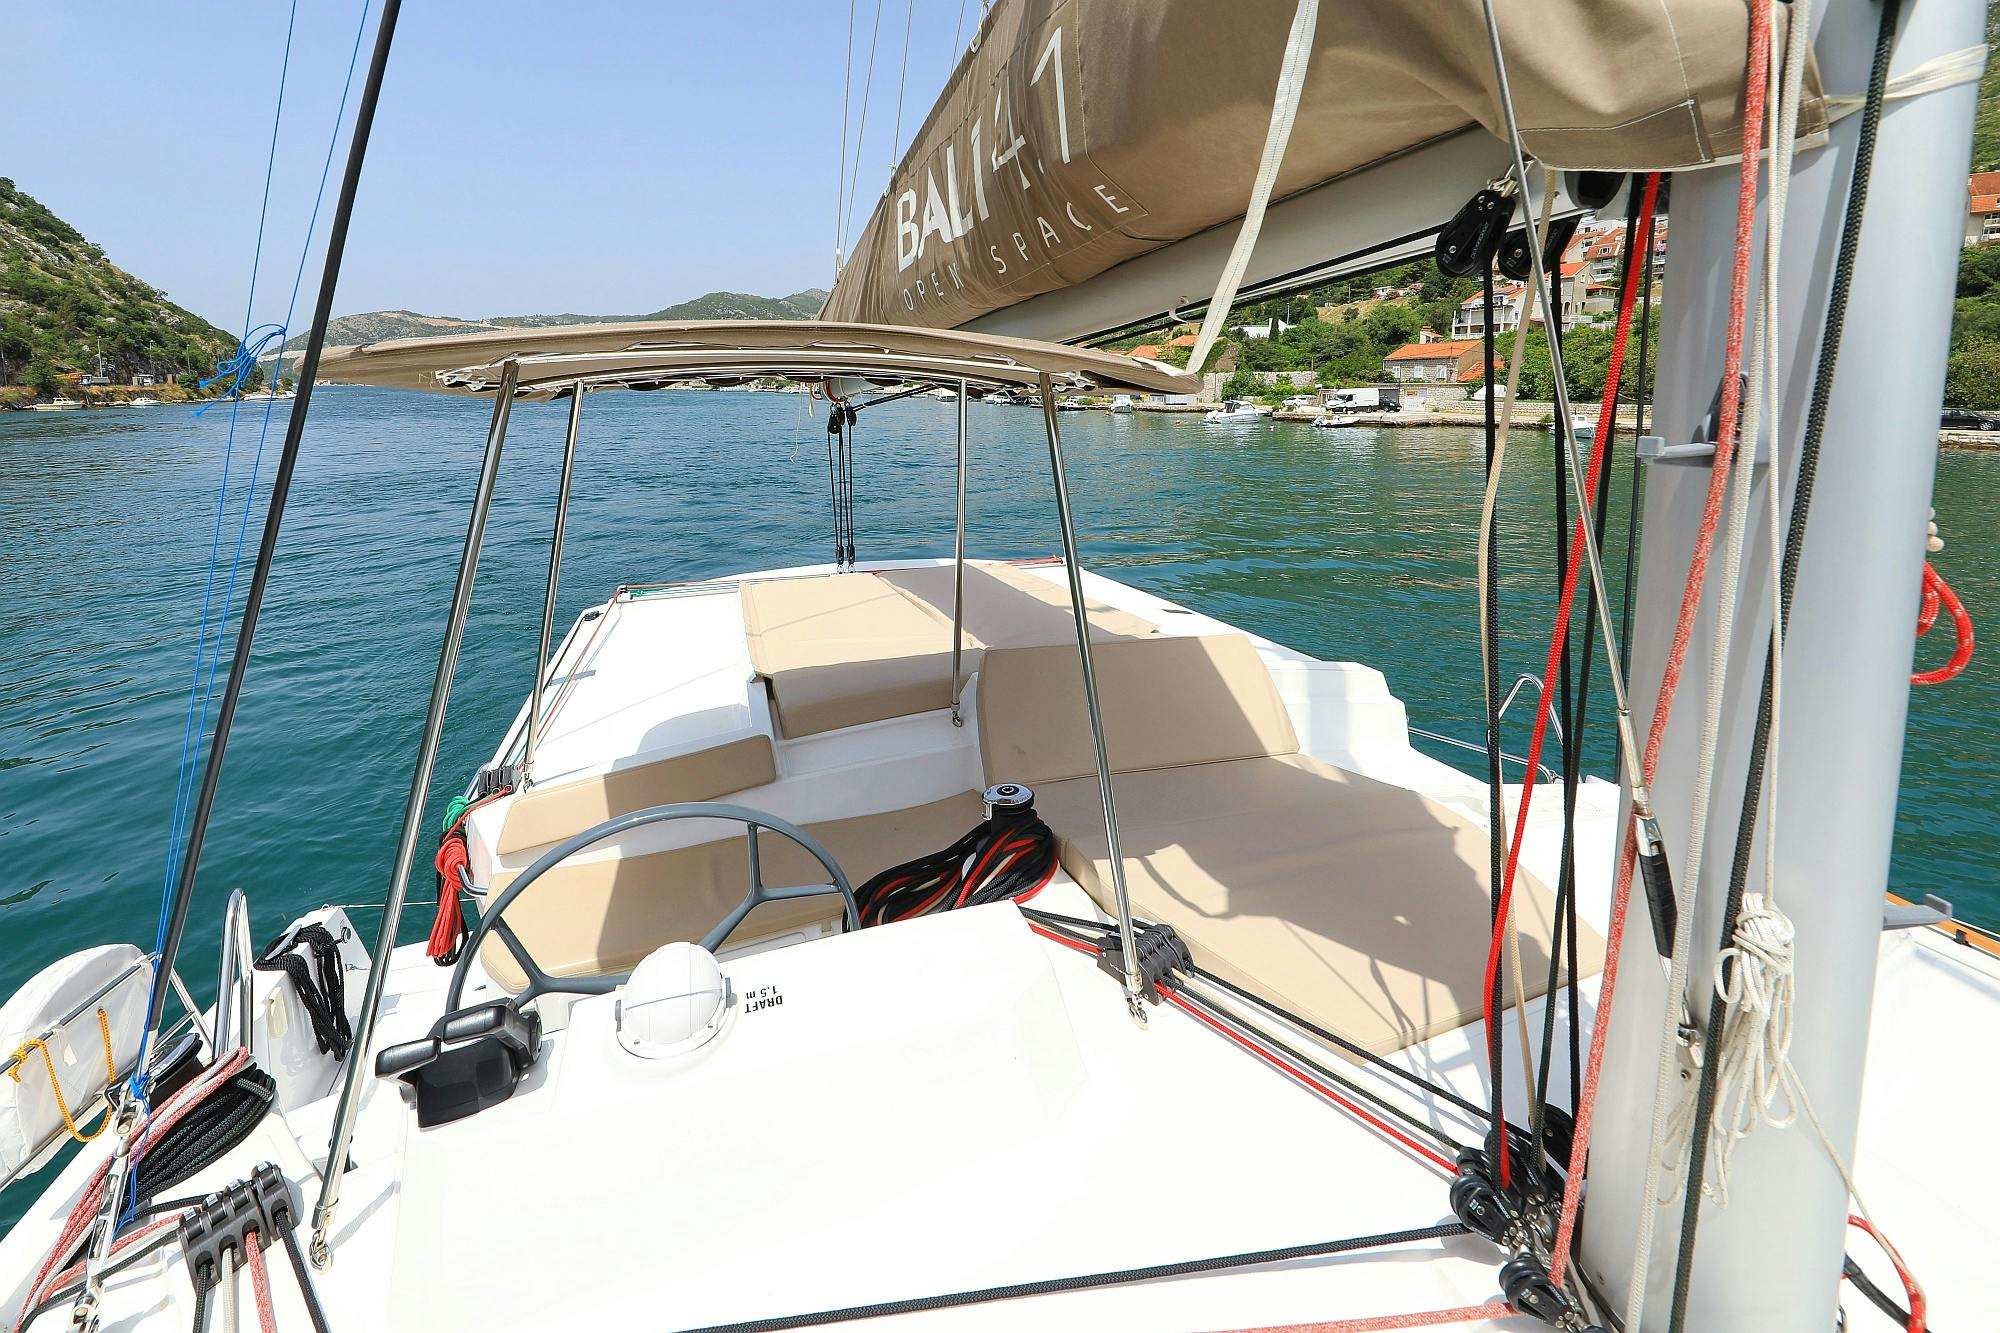 Book Bali 4.1 - 4 cab. Catamaran for bareboat charter in Dubrovnik, Komolac, ACI Marina Dubrovnik, Dubrovnik region, Croatia with TripYacht!, picture 7